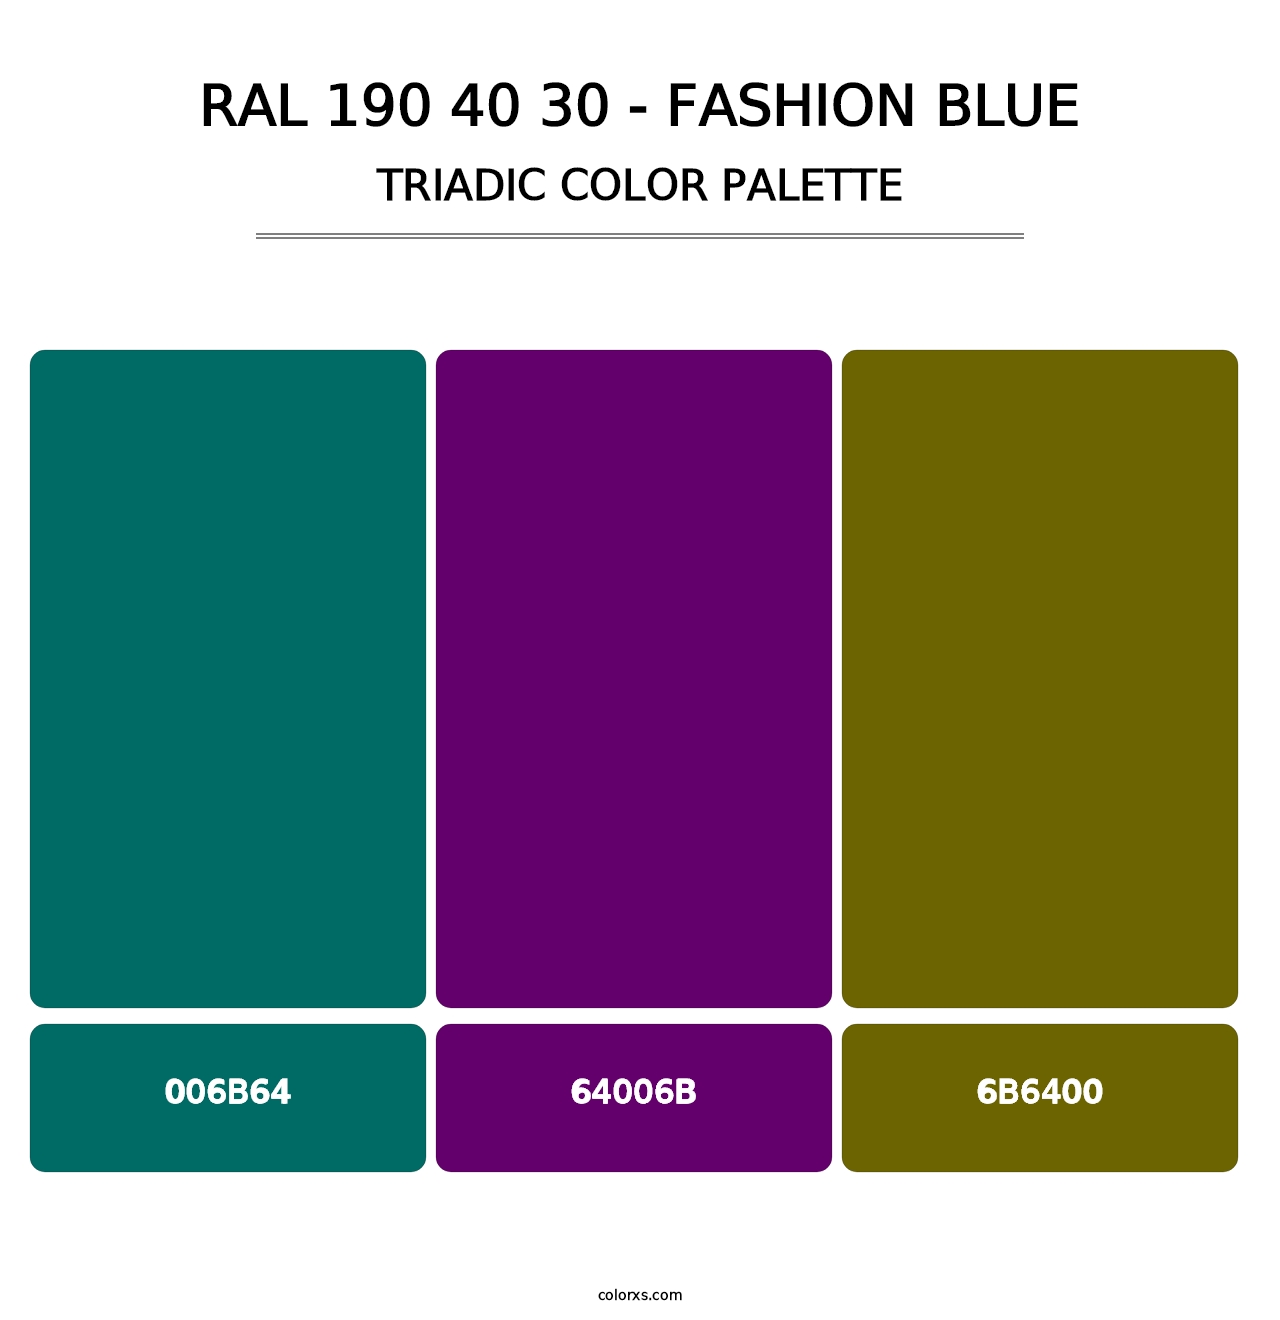 RAL 190 40 30 - Fashion Blue - Triadic Color Palette